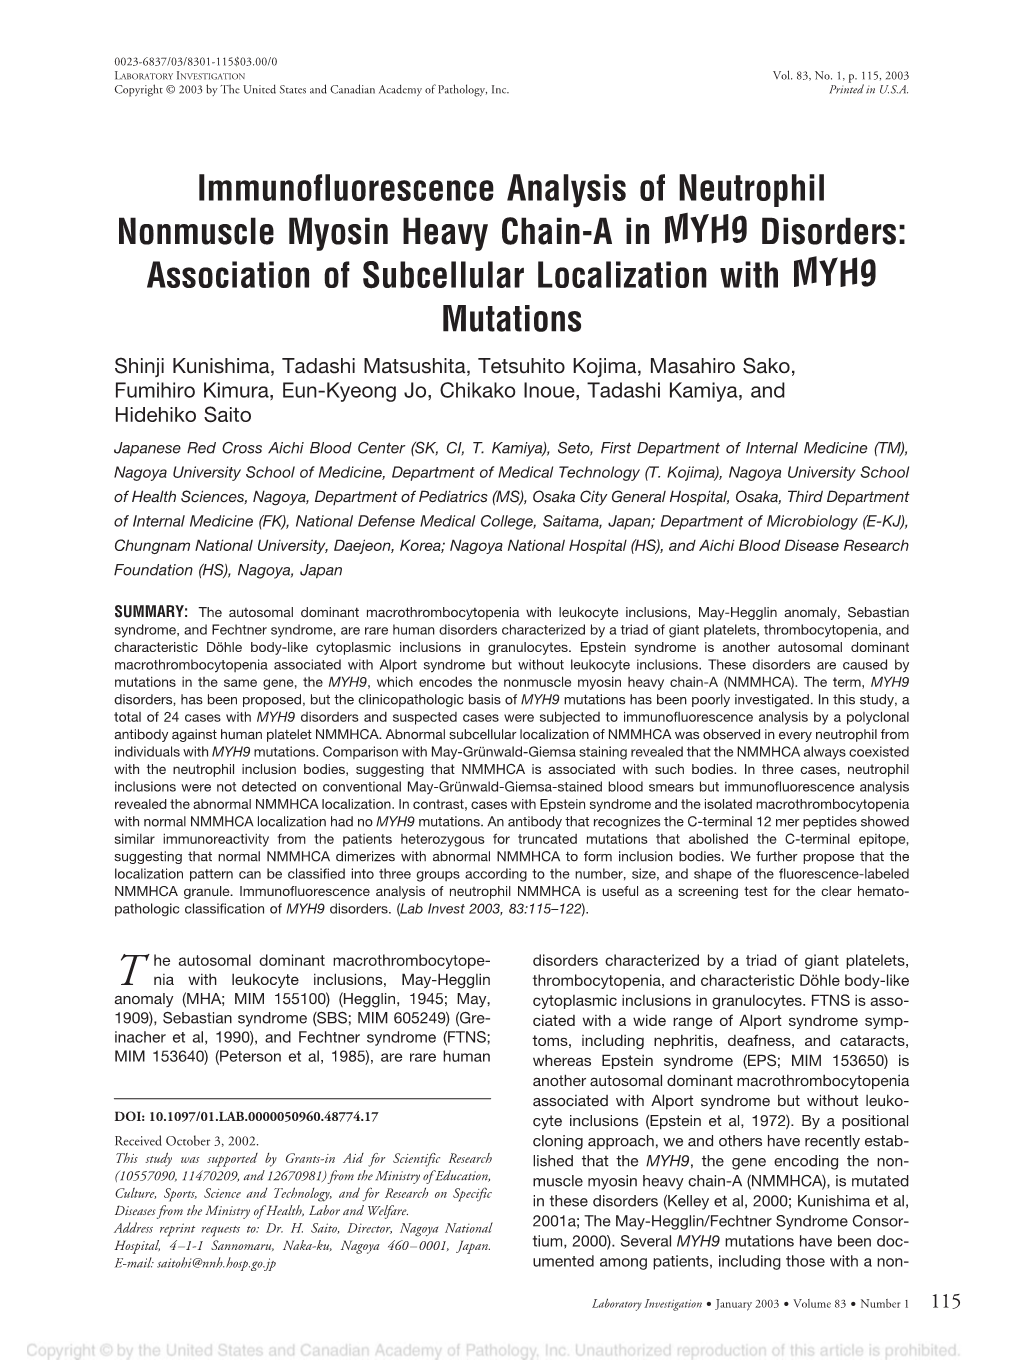 Immunofluorescence Analysis of Neutrophil Nonmuscle